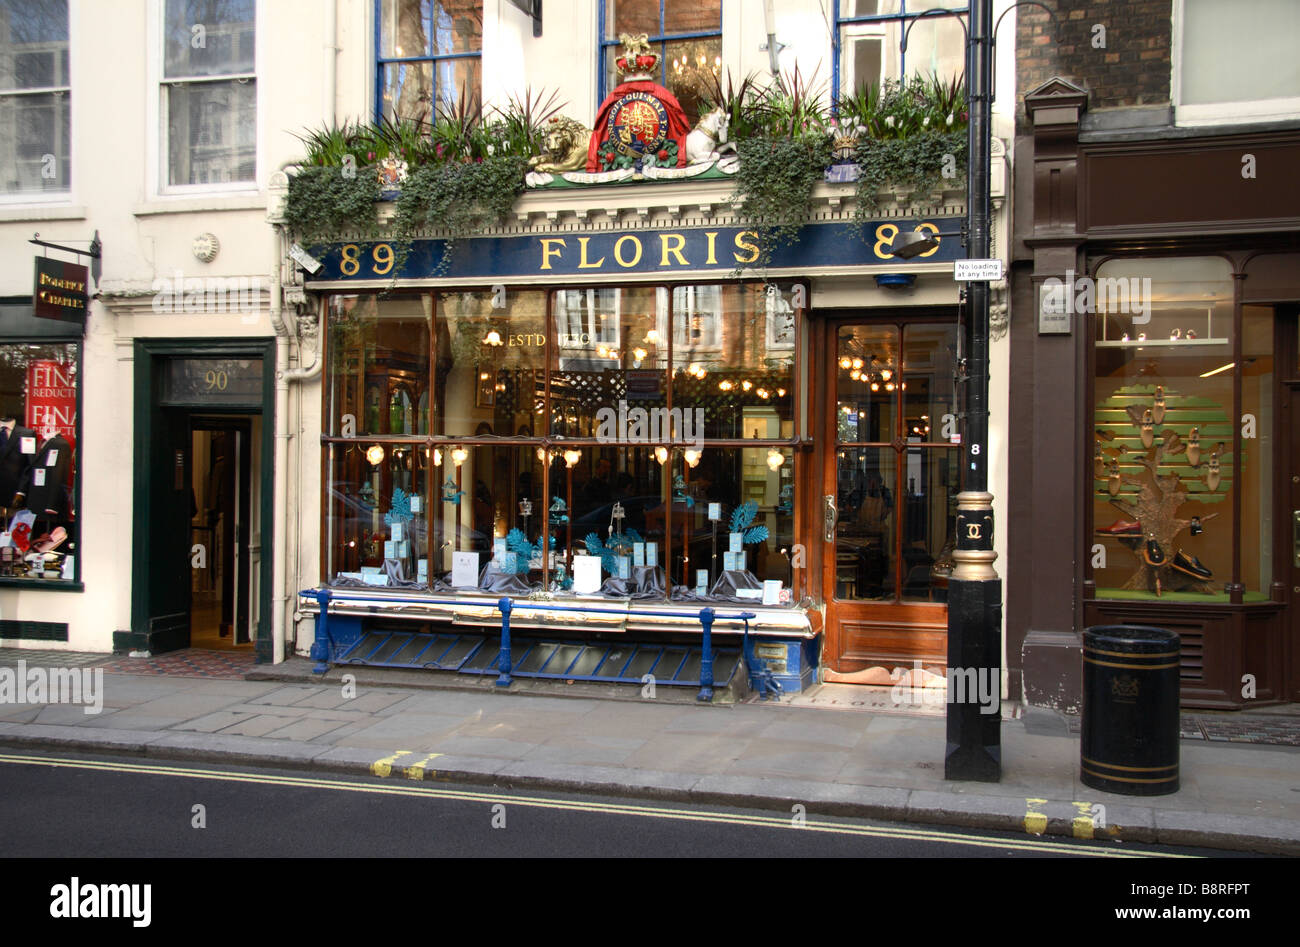 The shop front of the Floris perfume shop, London. Feb 2009 Stock Photo